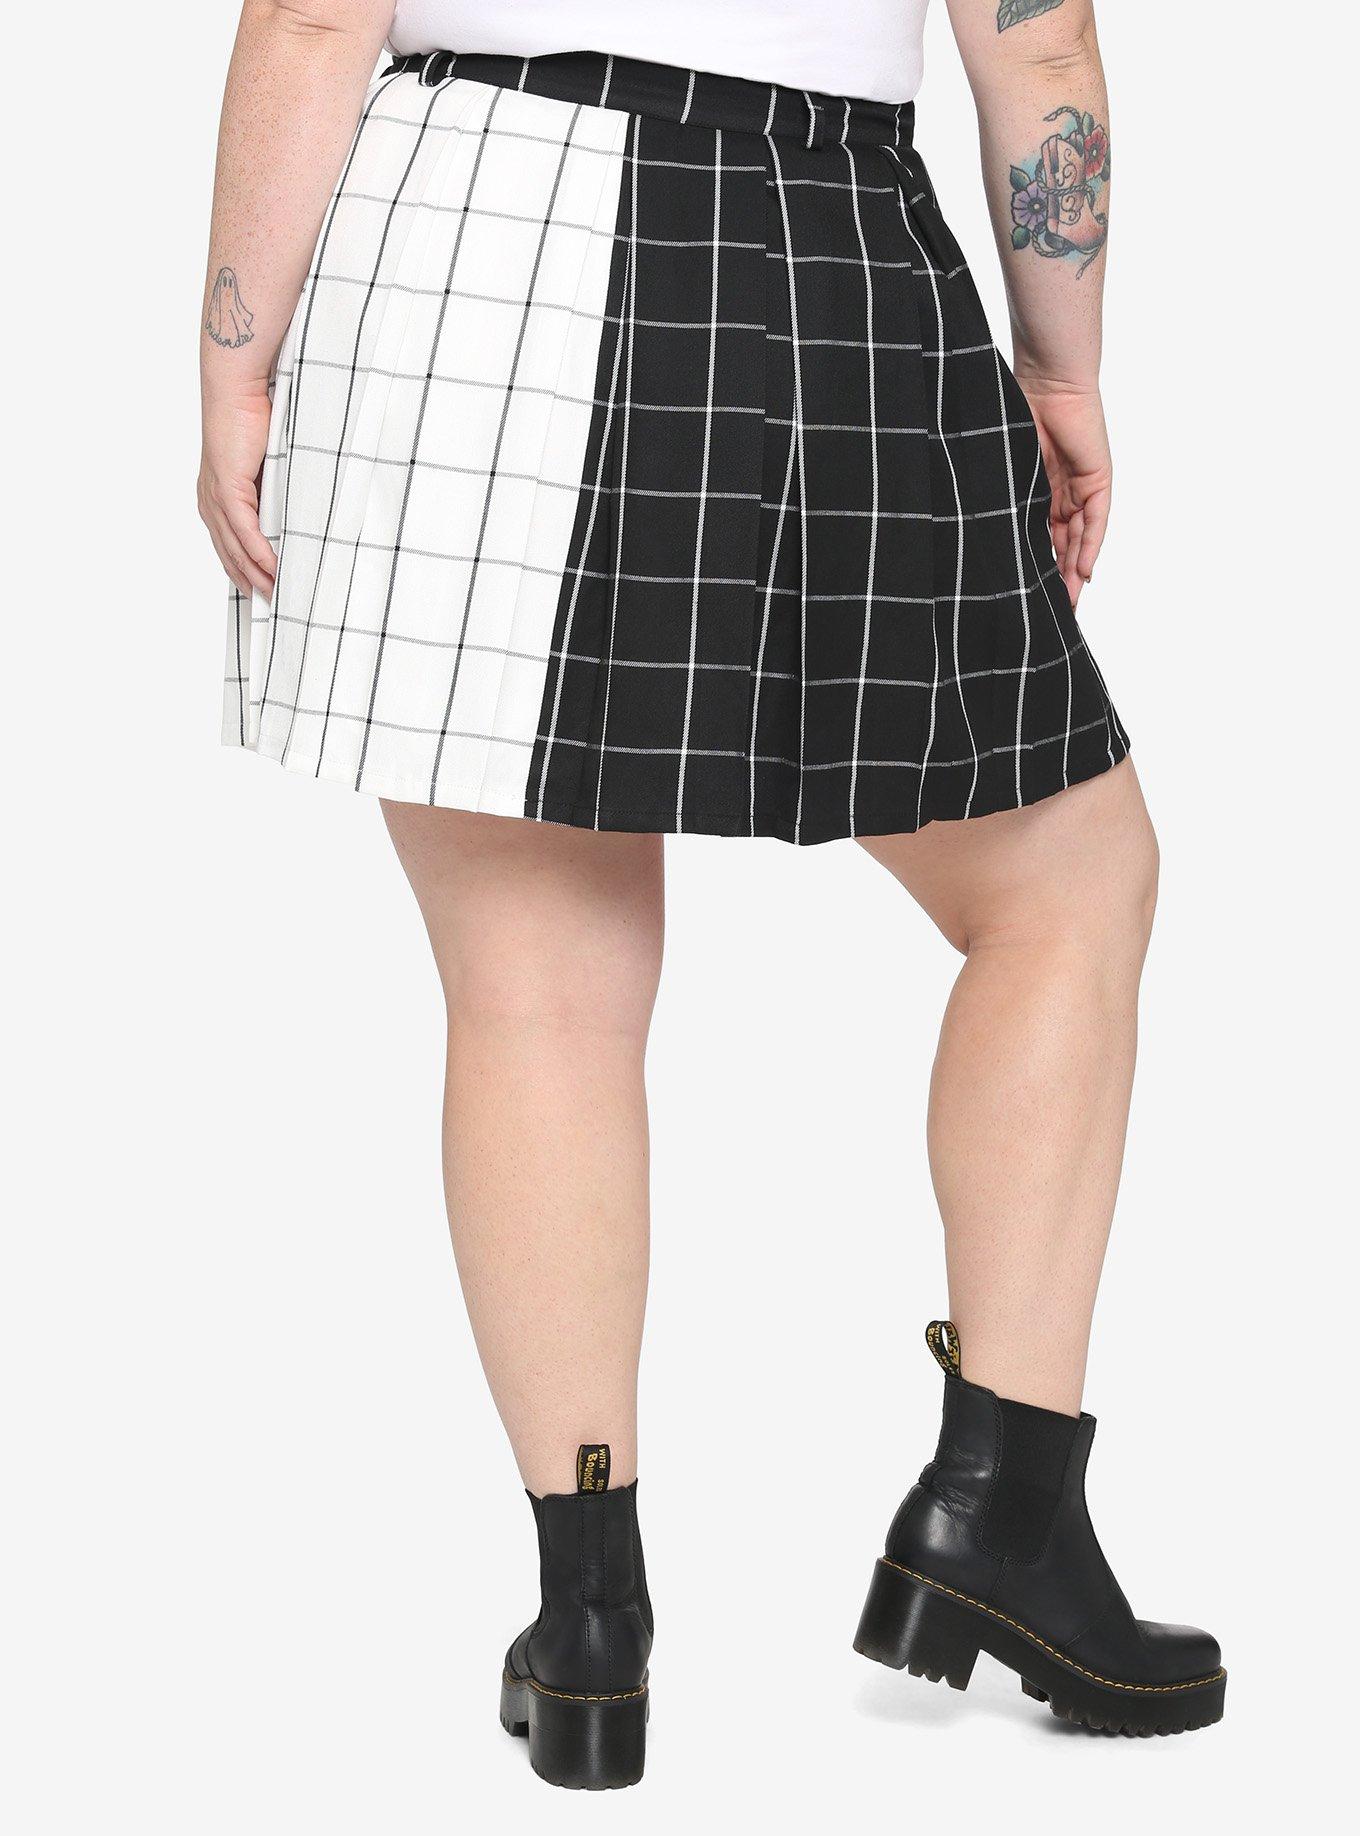 Black & White Split Grid & Chain Skirt Plus Size, PLAID, alternate